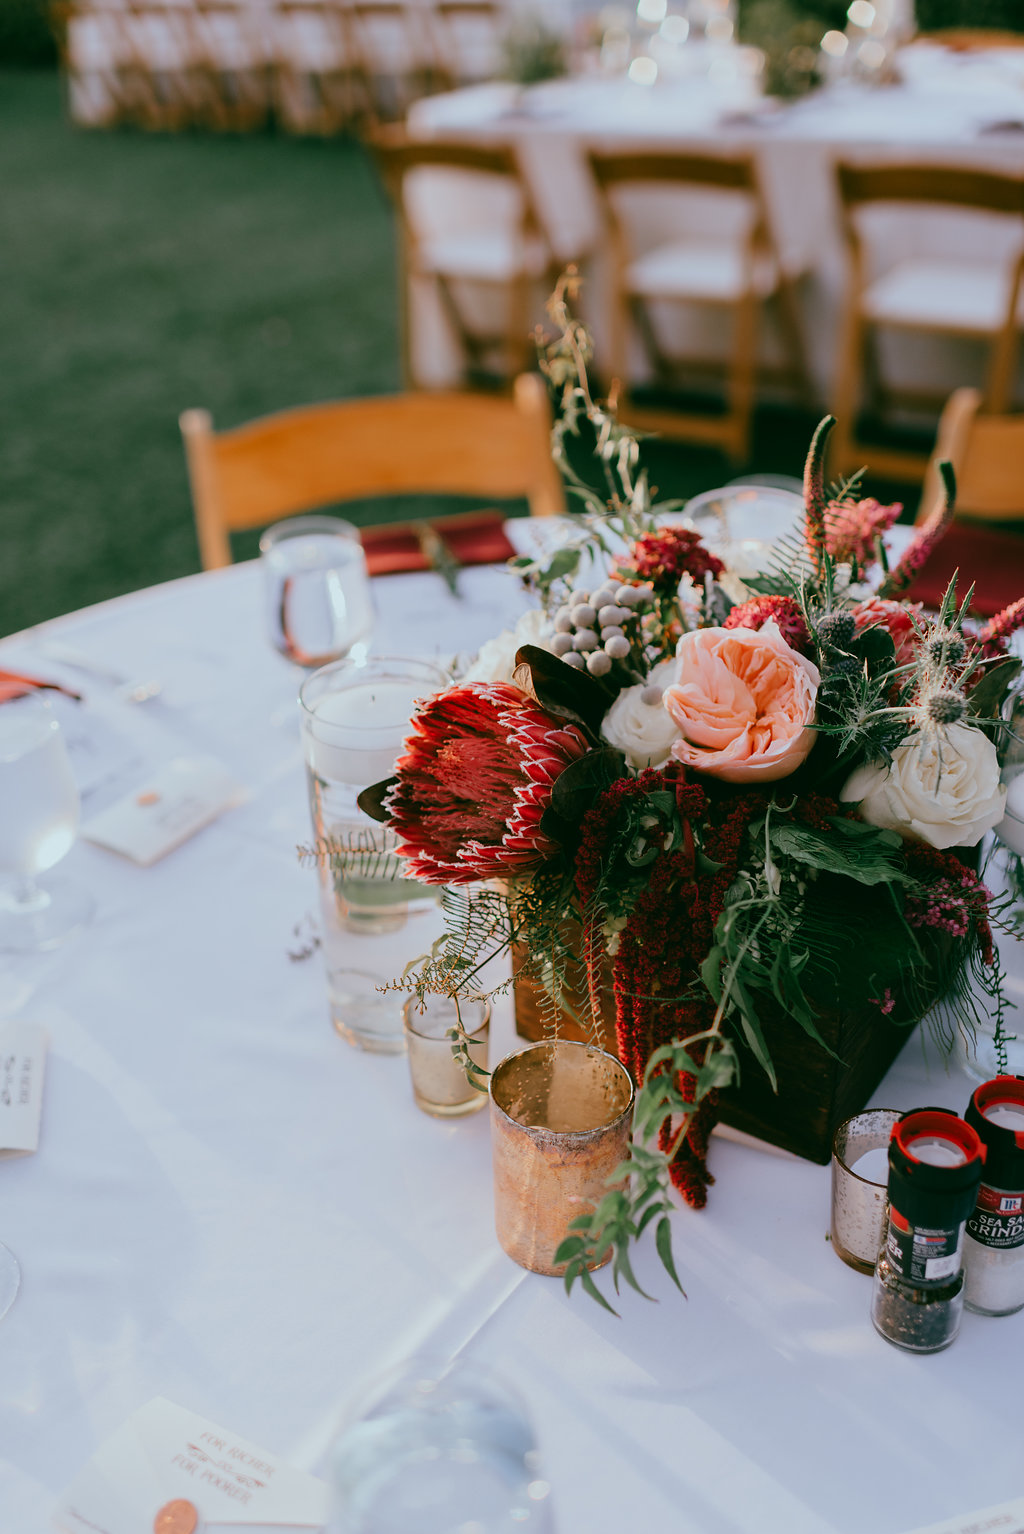 Garden Lawn Wedding Reception Decor, Wild Organic Red/Burgundy, Blush Pink, Ivory and Greenery Low Floral Centerpiece